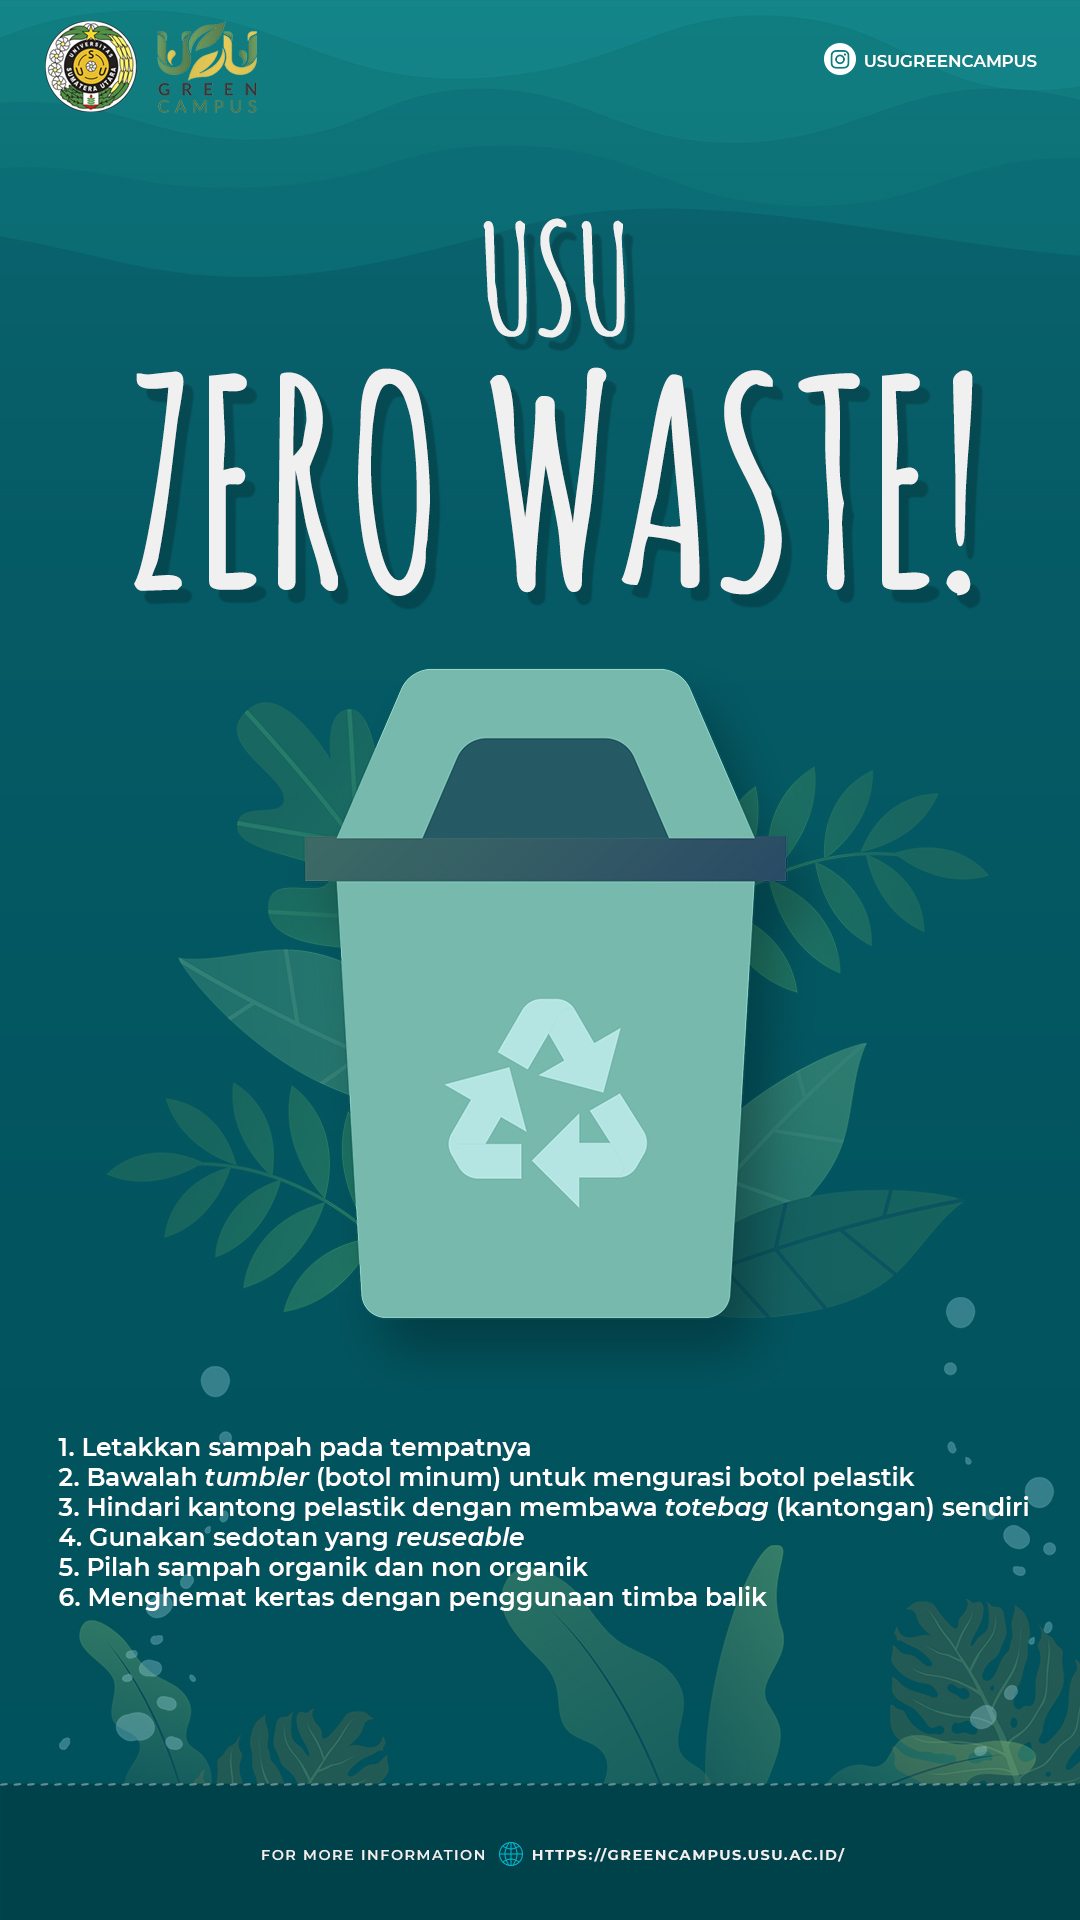 USU Zero Waste